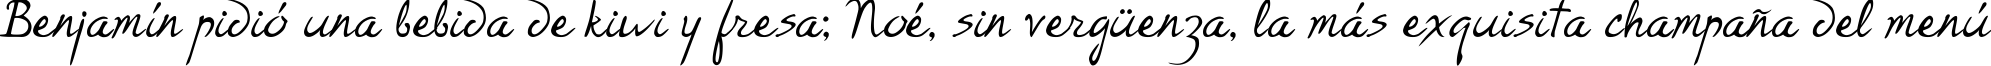 Пример написания шрифтом P22 Rodin Regular текста на испанском